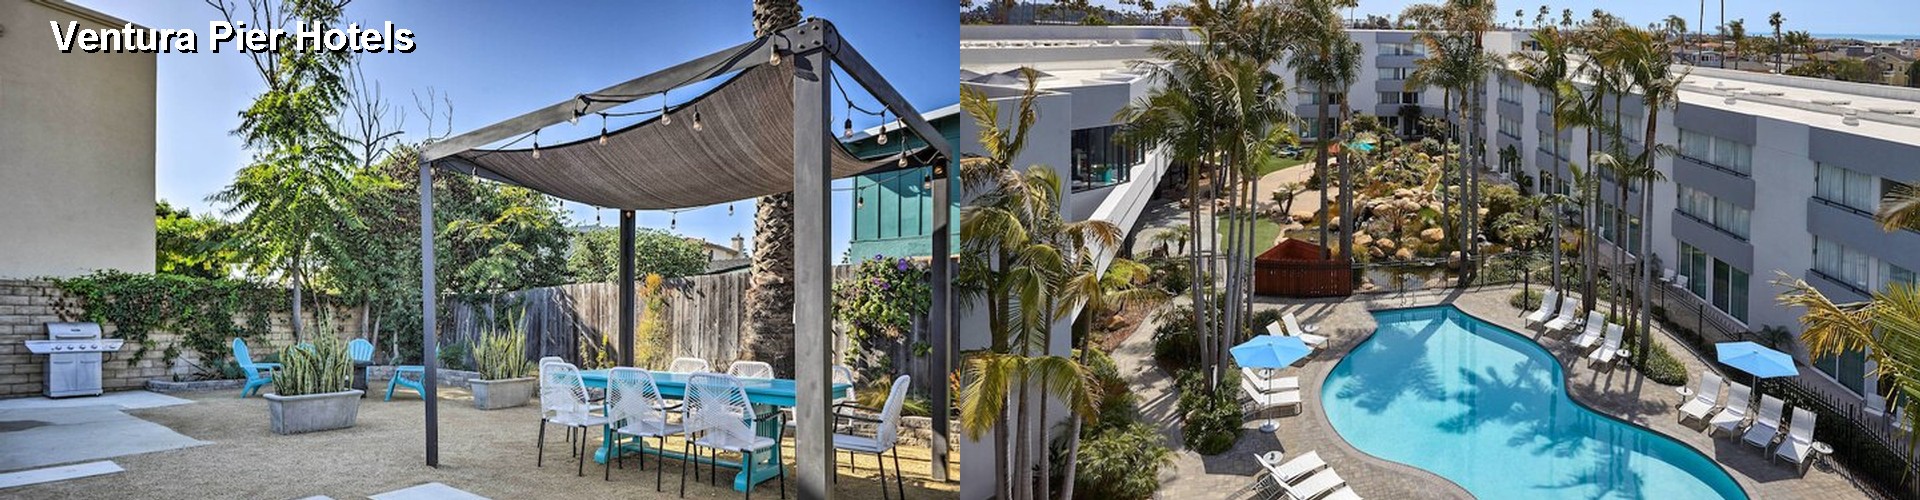 5 Best Hotels near Ventura Pier